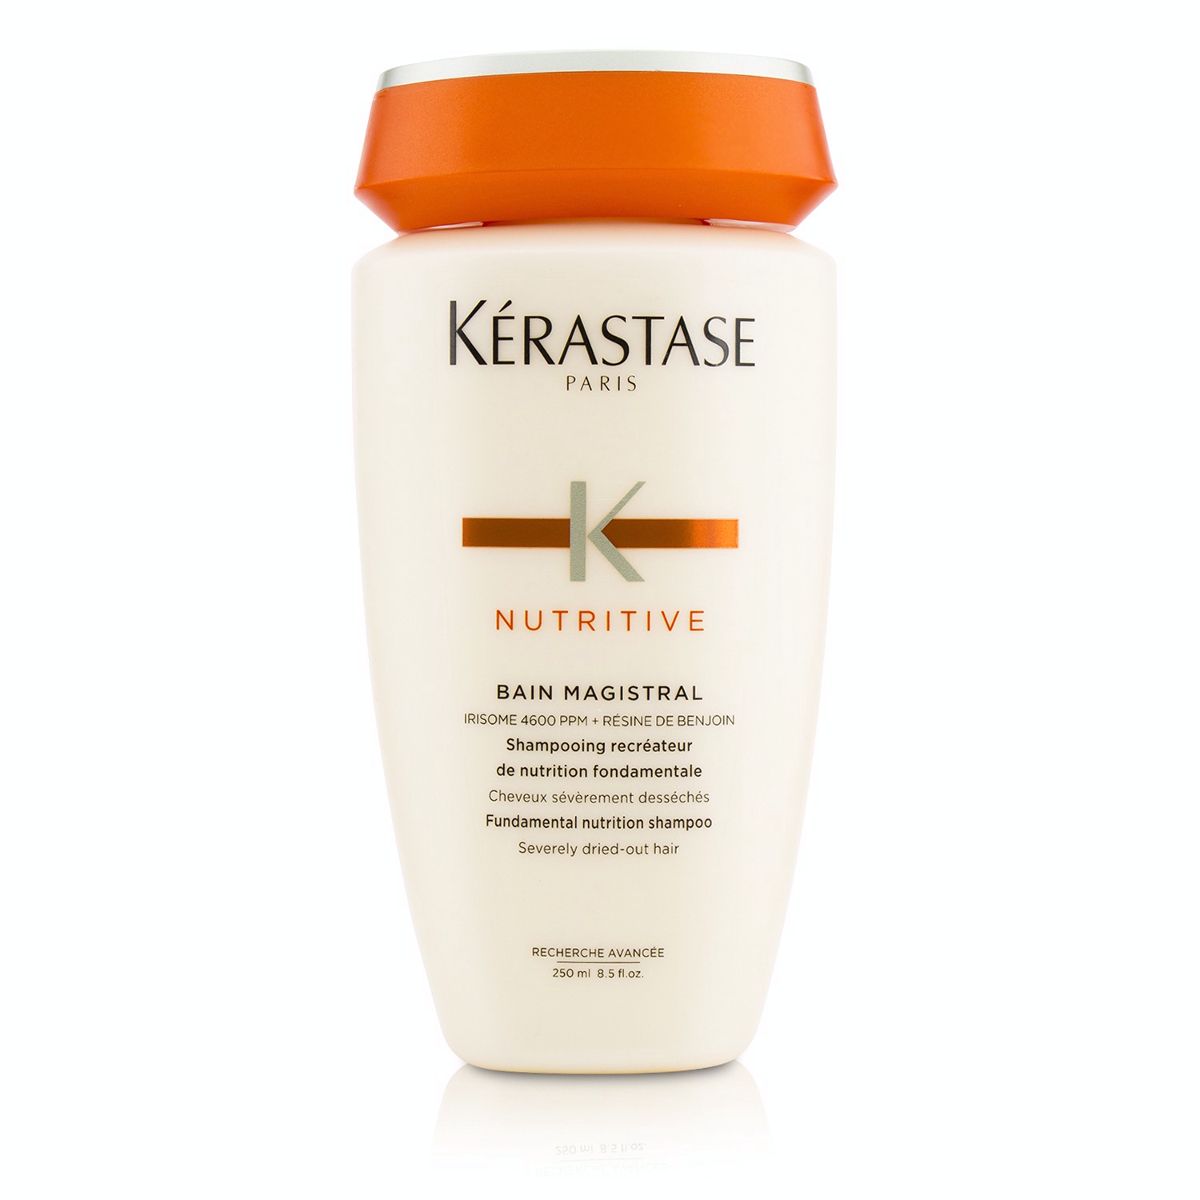 Nutritive Bain Magistral Fundamental Nutrition Shampoo (Severely Dried-Out Hair) Kerastase Image